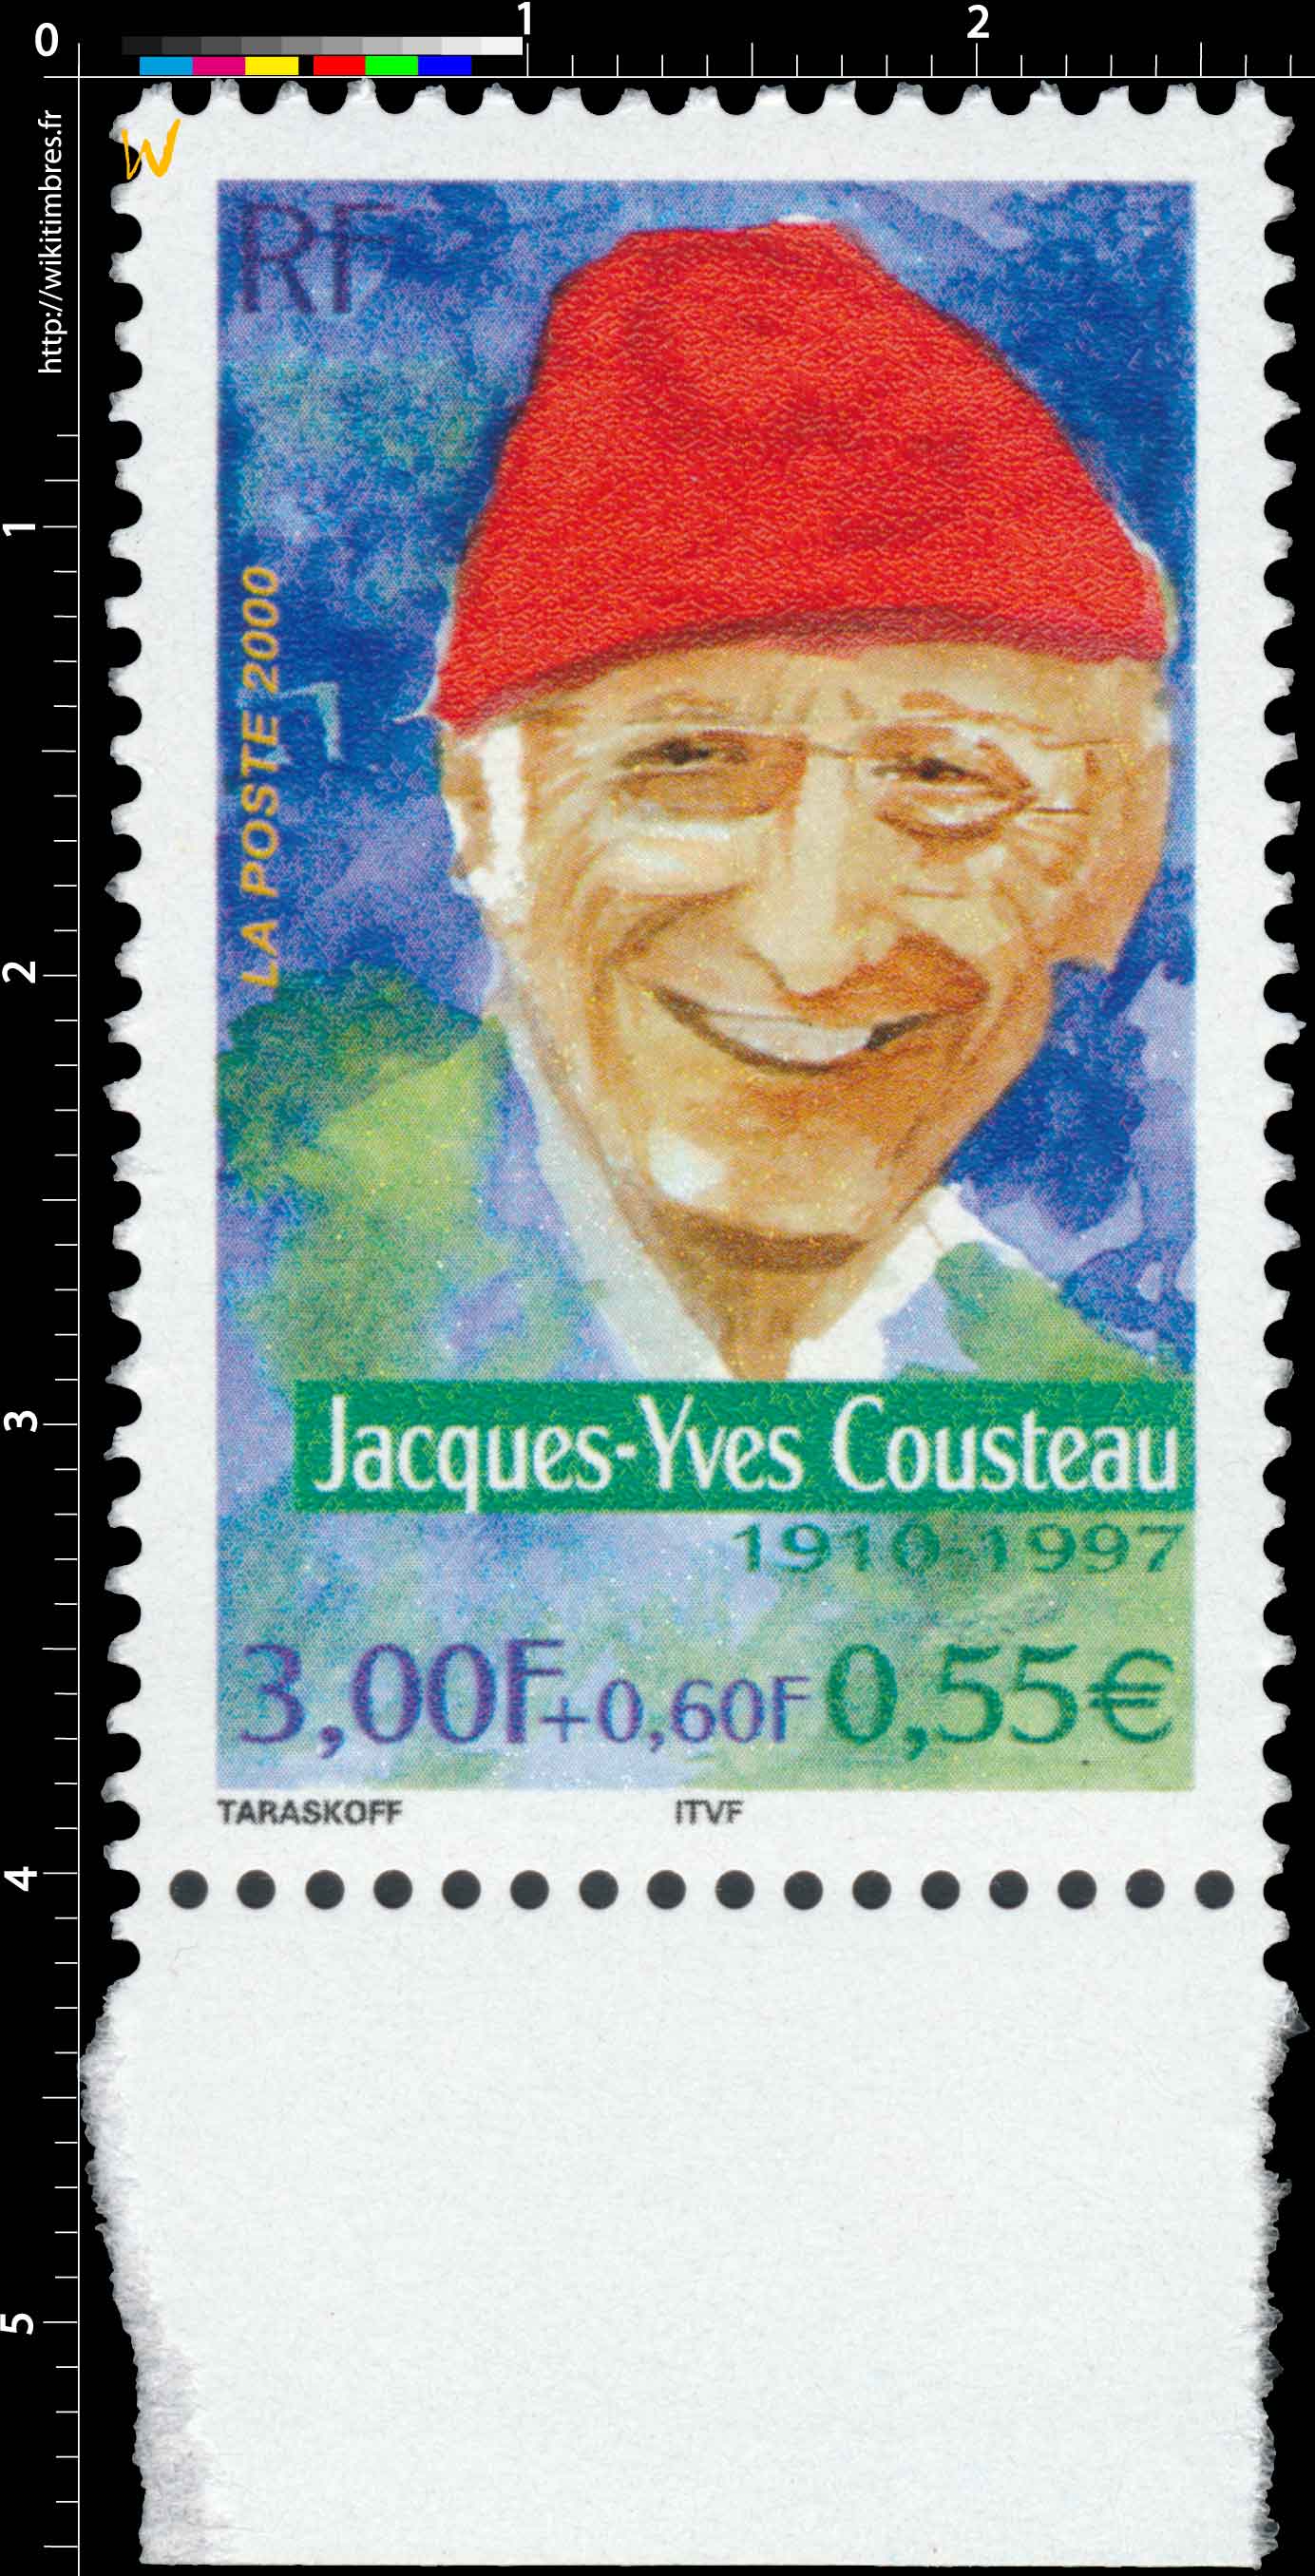 2000 Jacques-Yves Cousteau 1910-1997